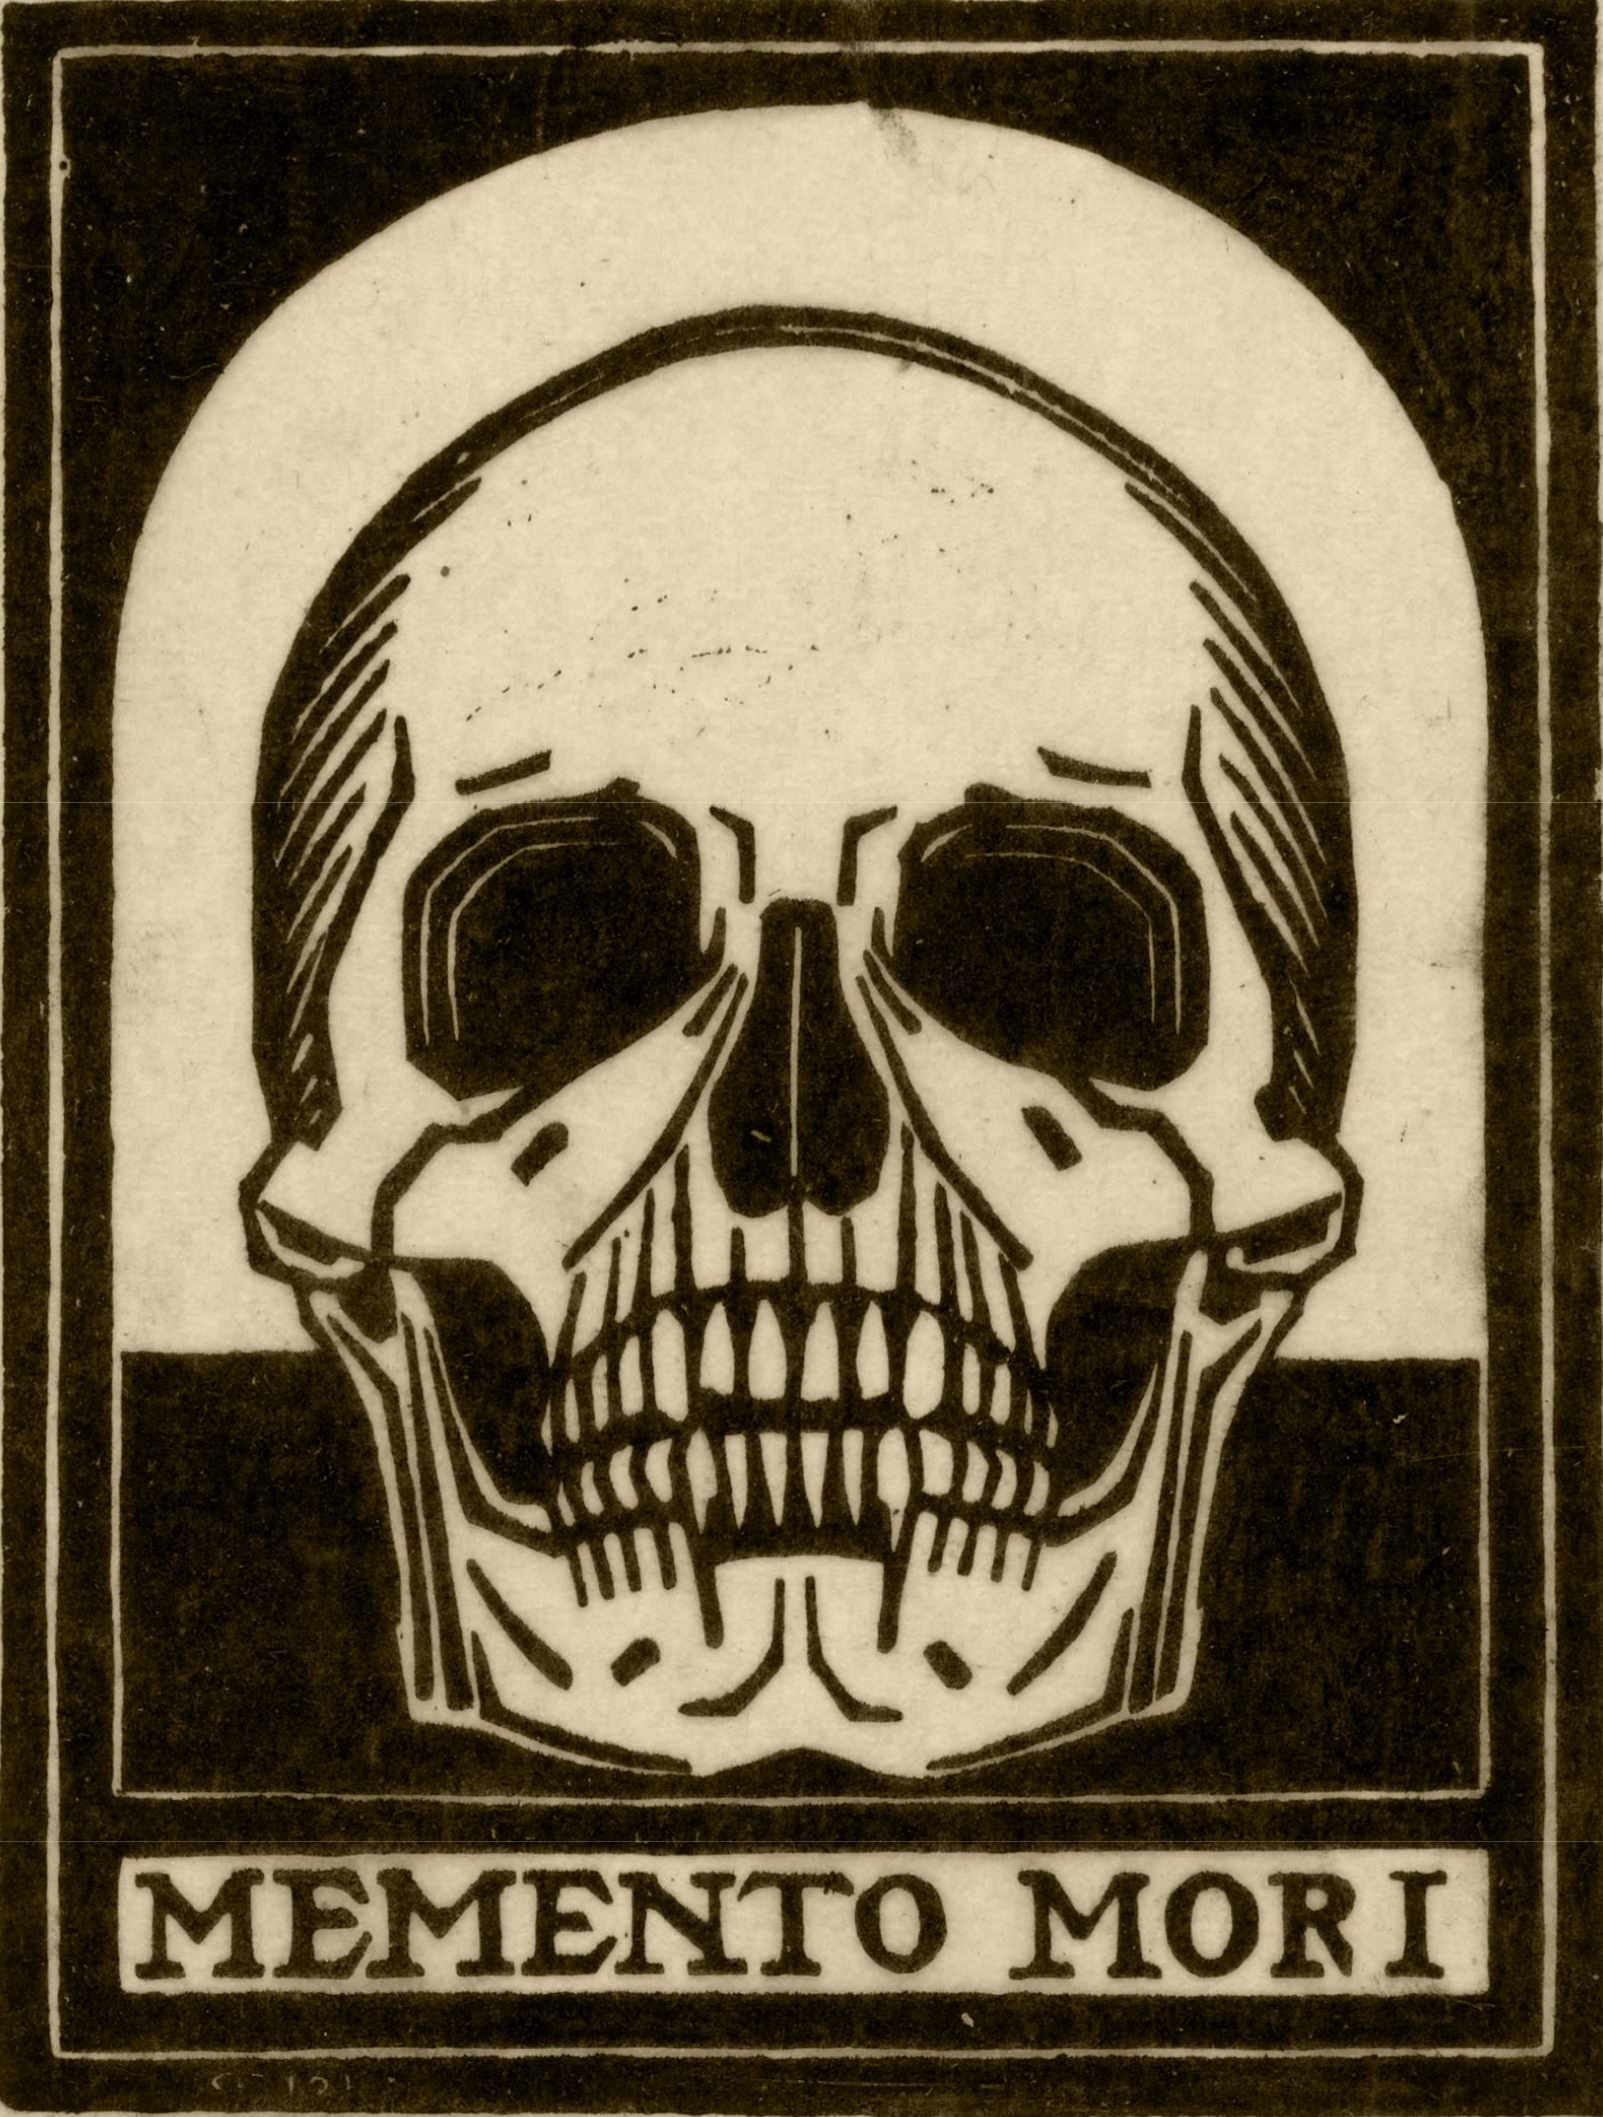 Skull with “Memento Mori” written underneath.